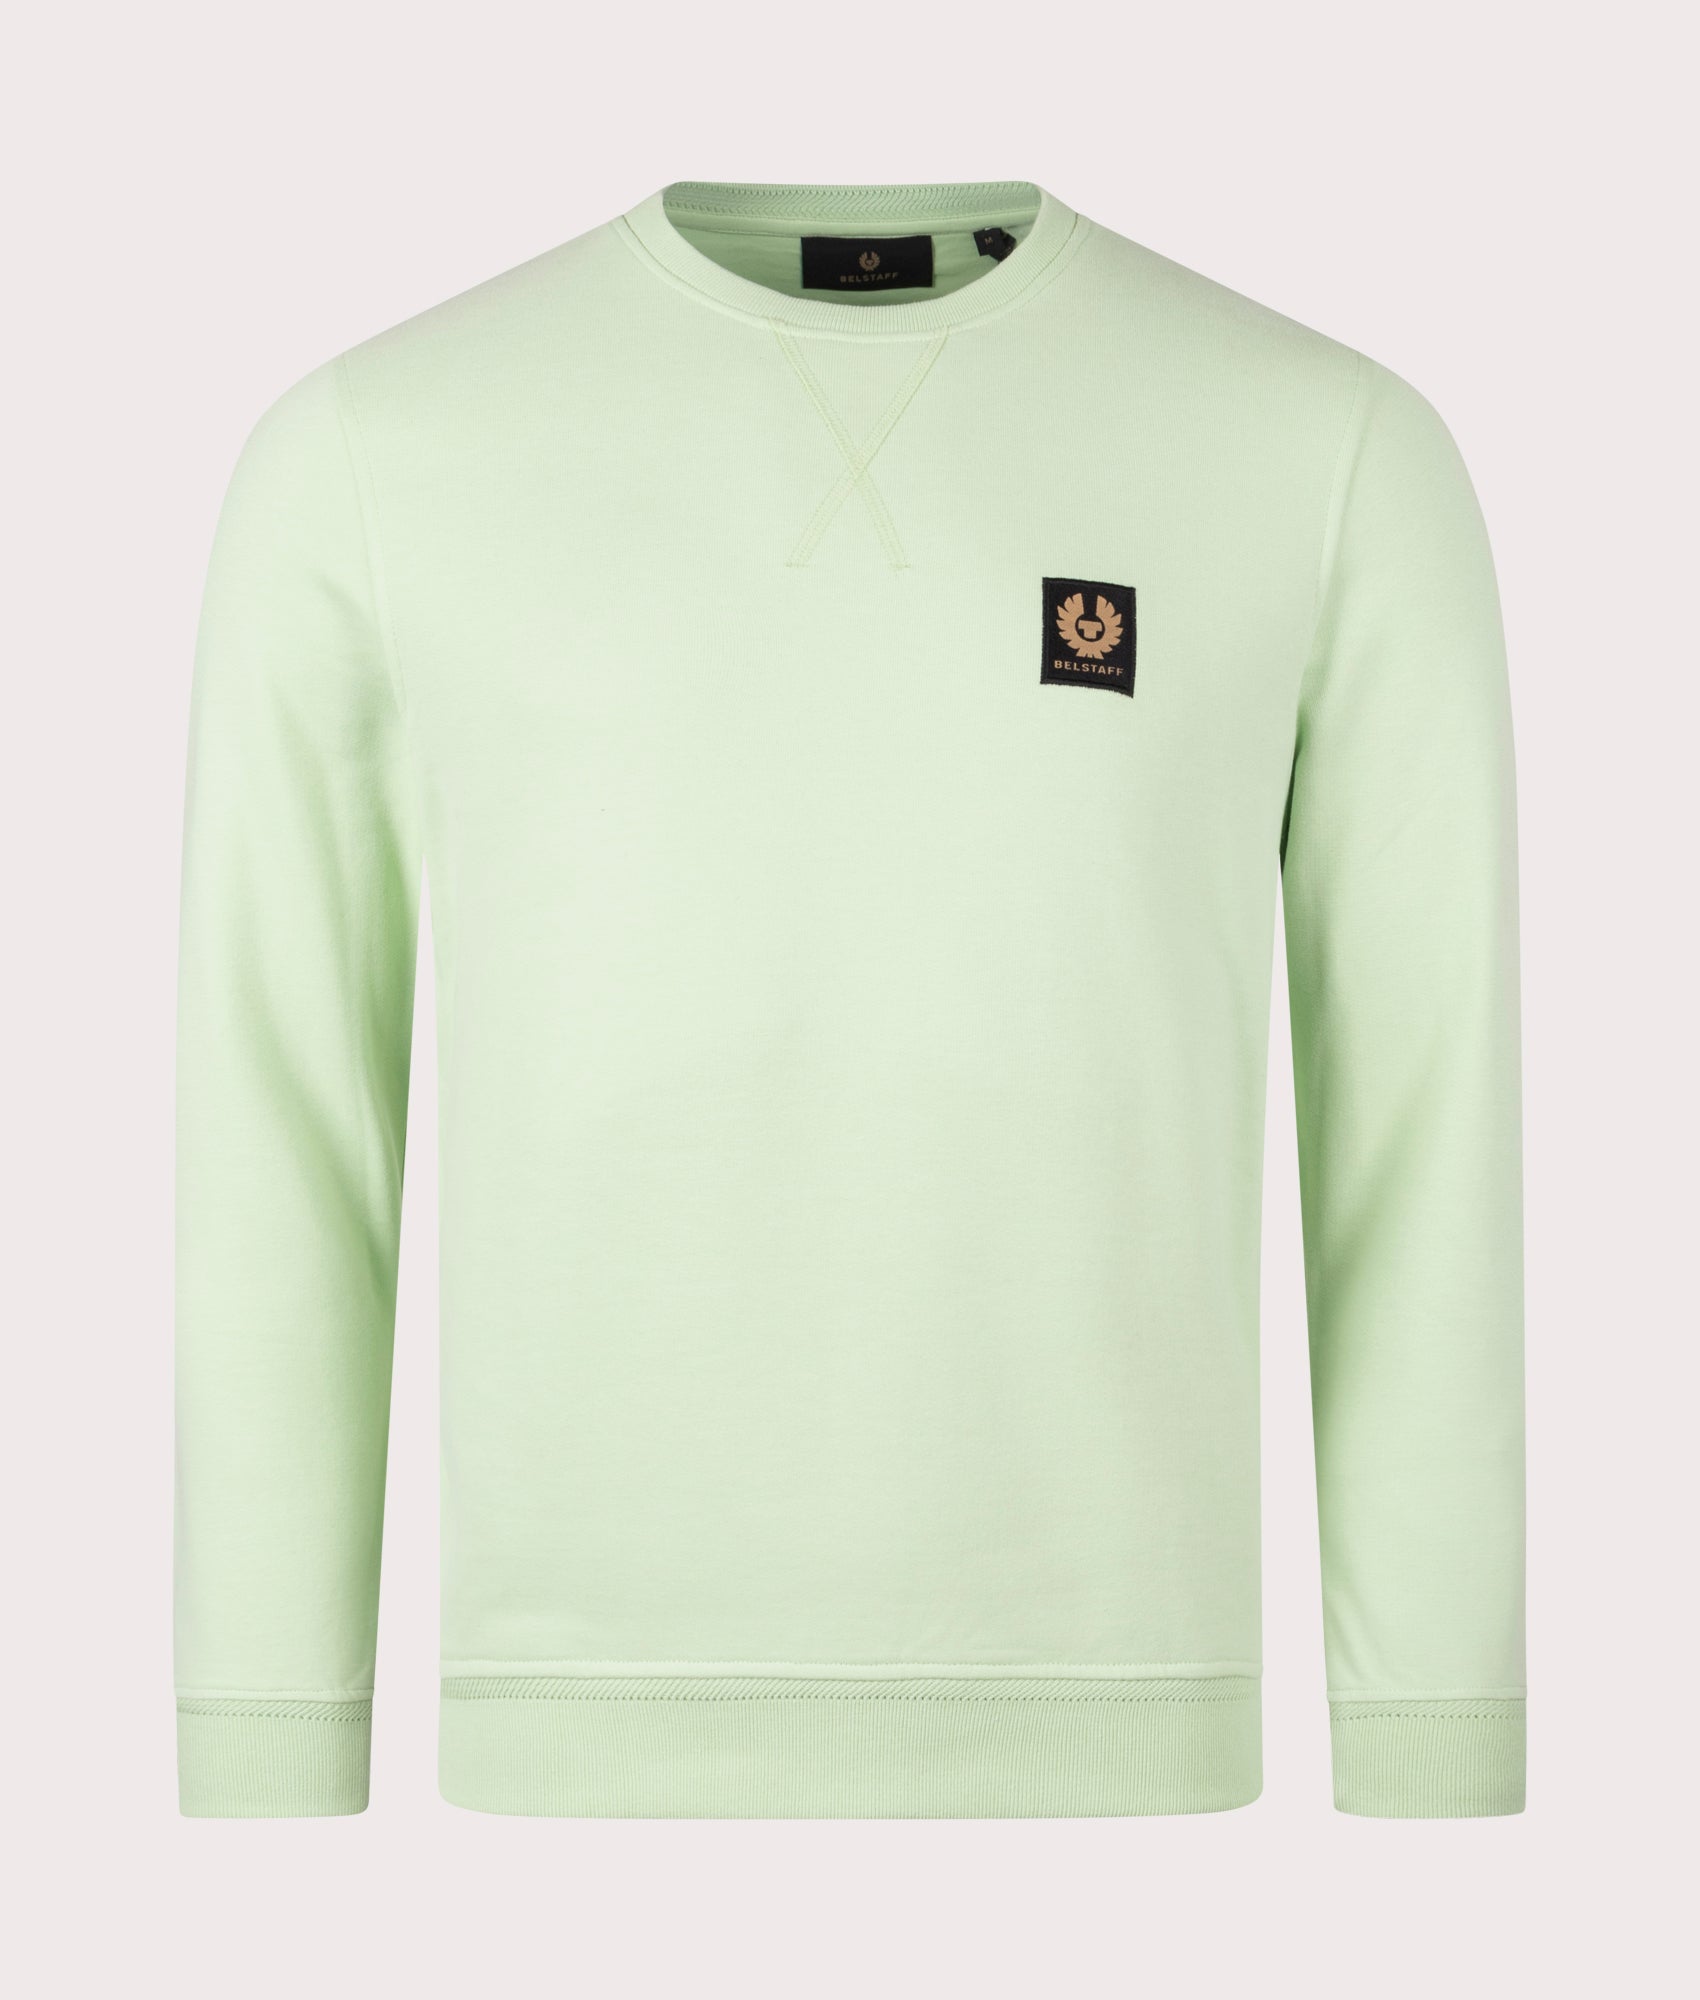 Belstaff Mens Belstaff Sweatshirt - Colour: New Leaf Green - Size: XXL